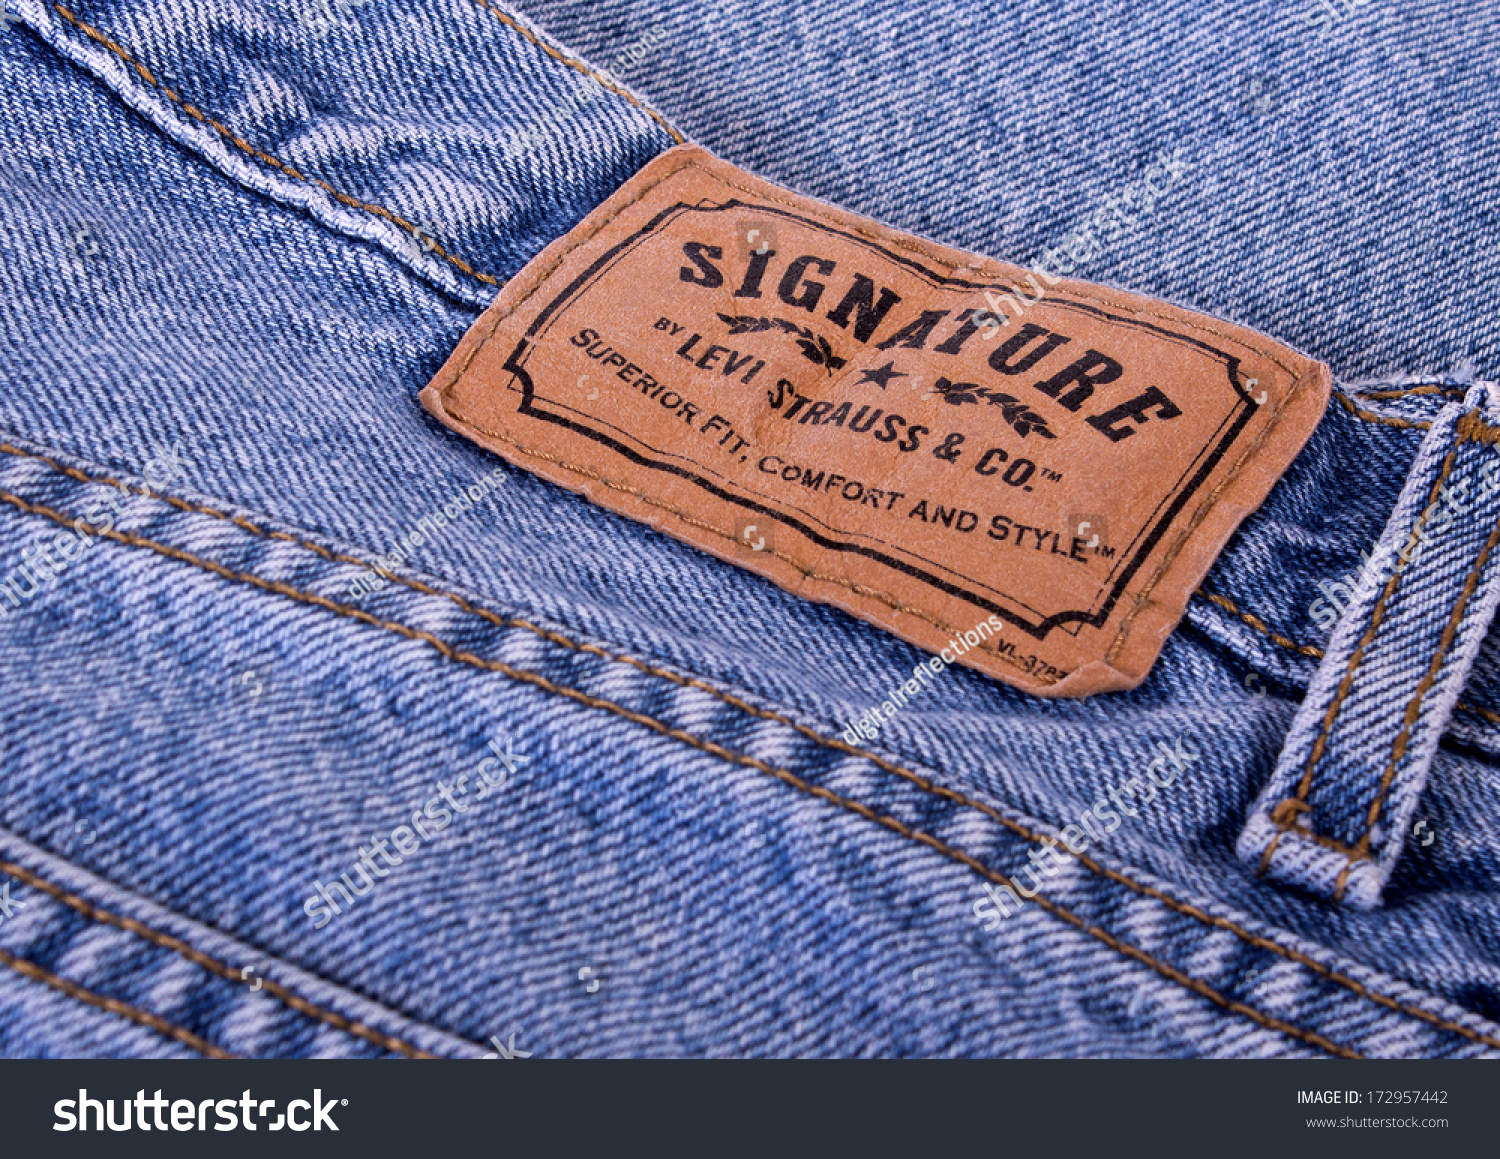 signature jeans by levi